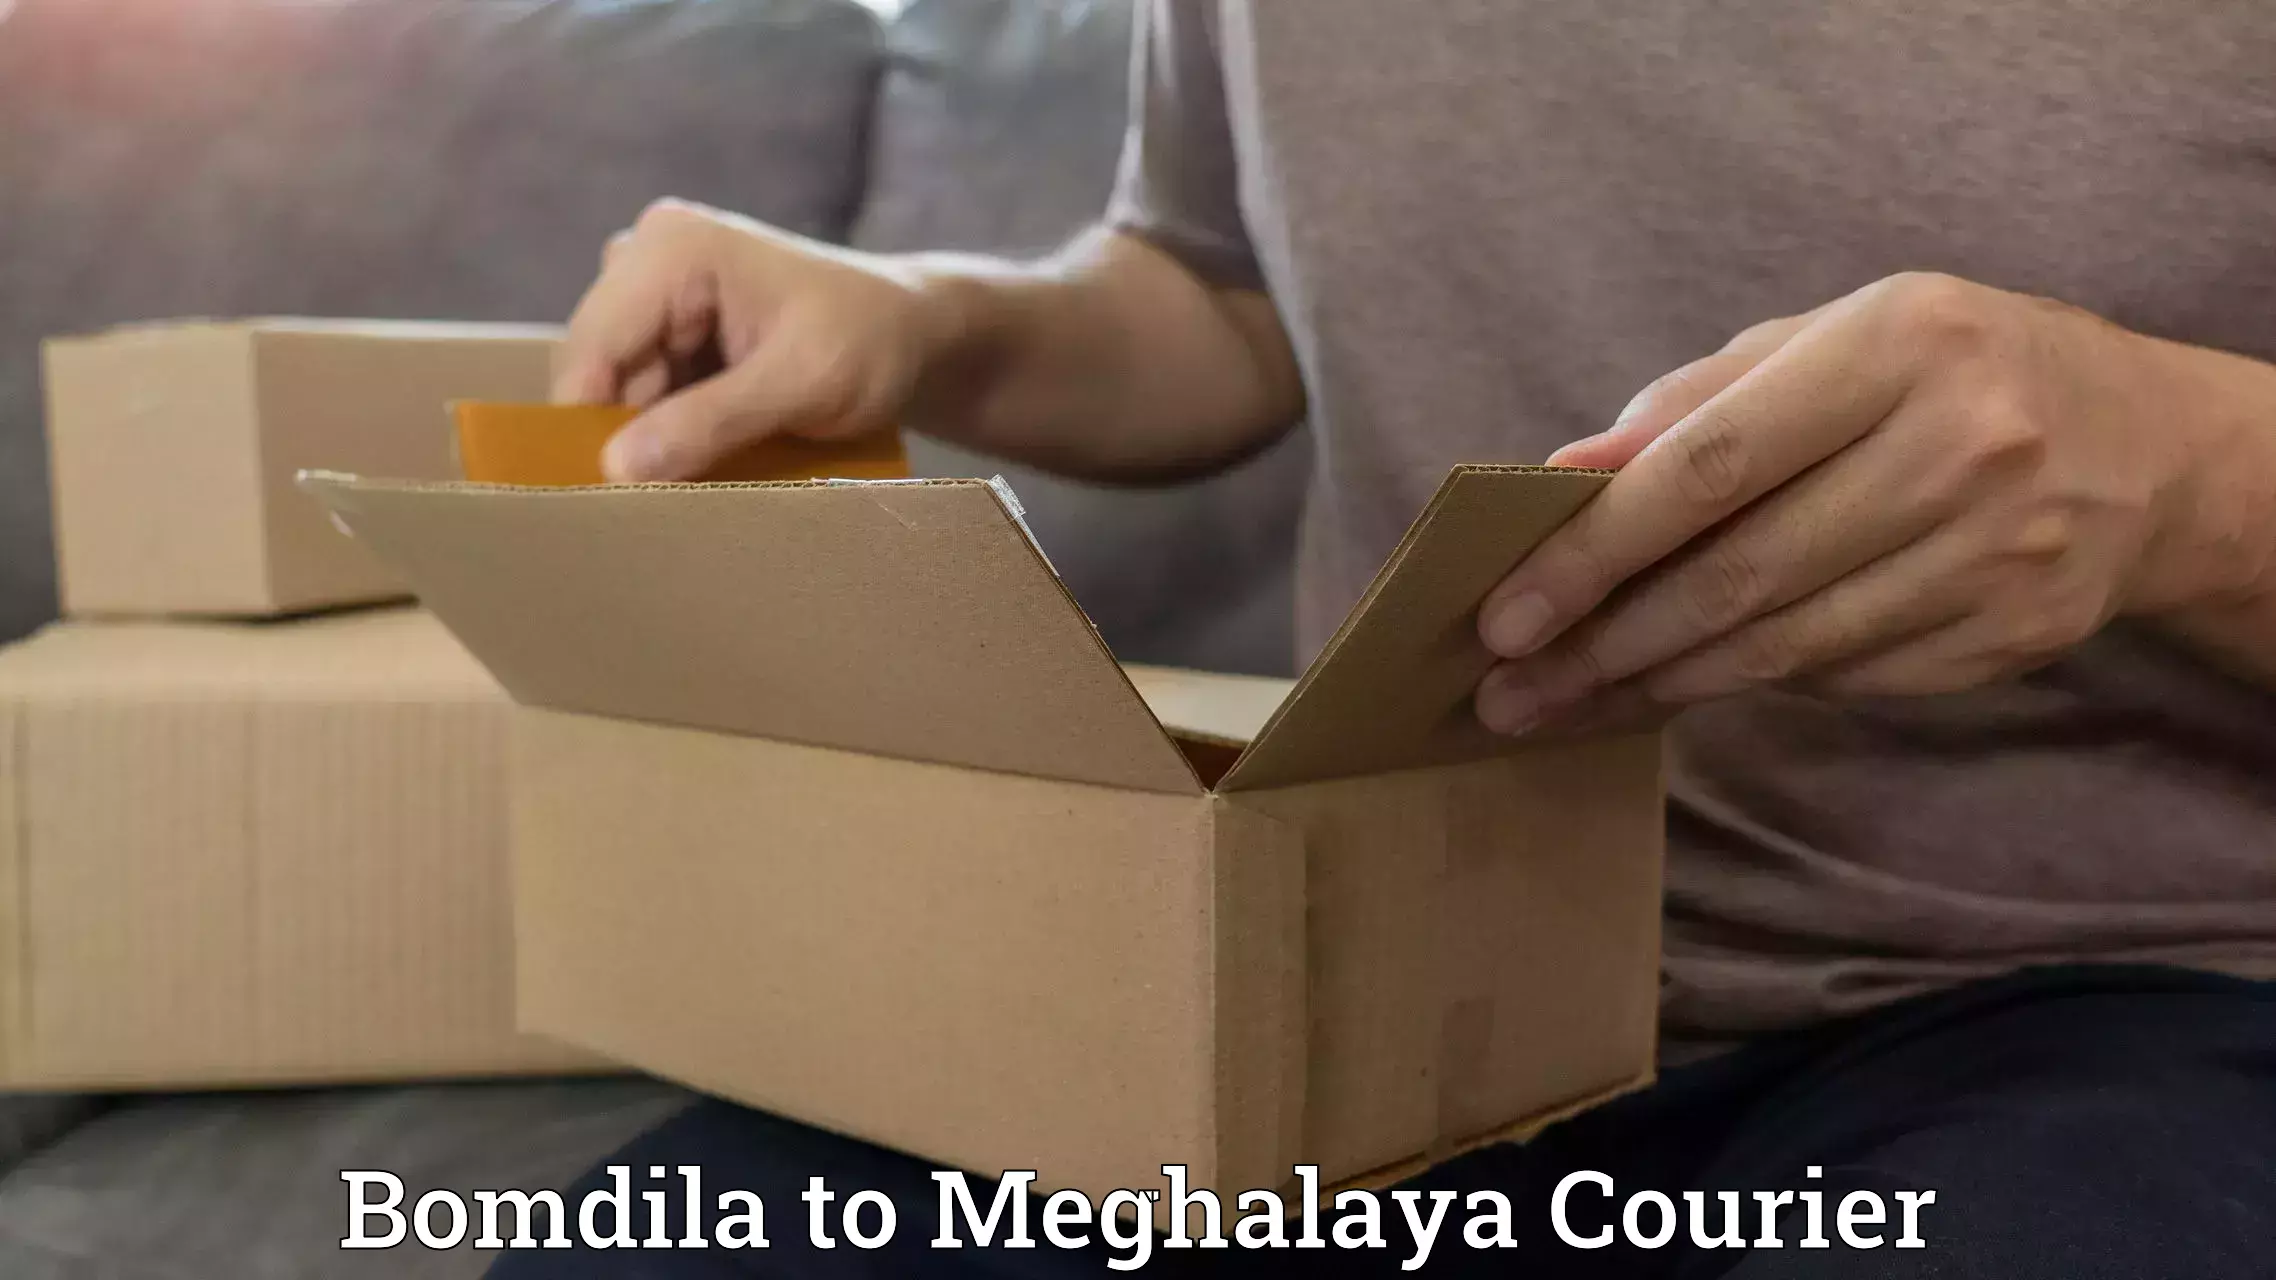 Professional courier handling Bomdila to Meghalaya